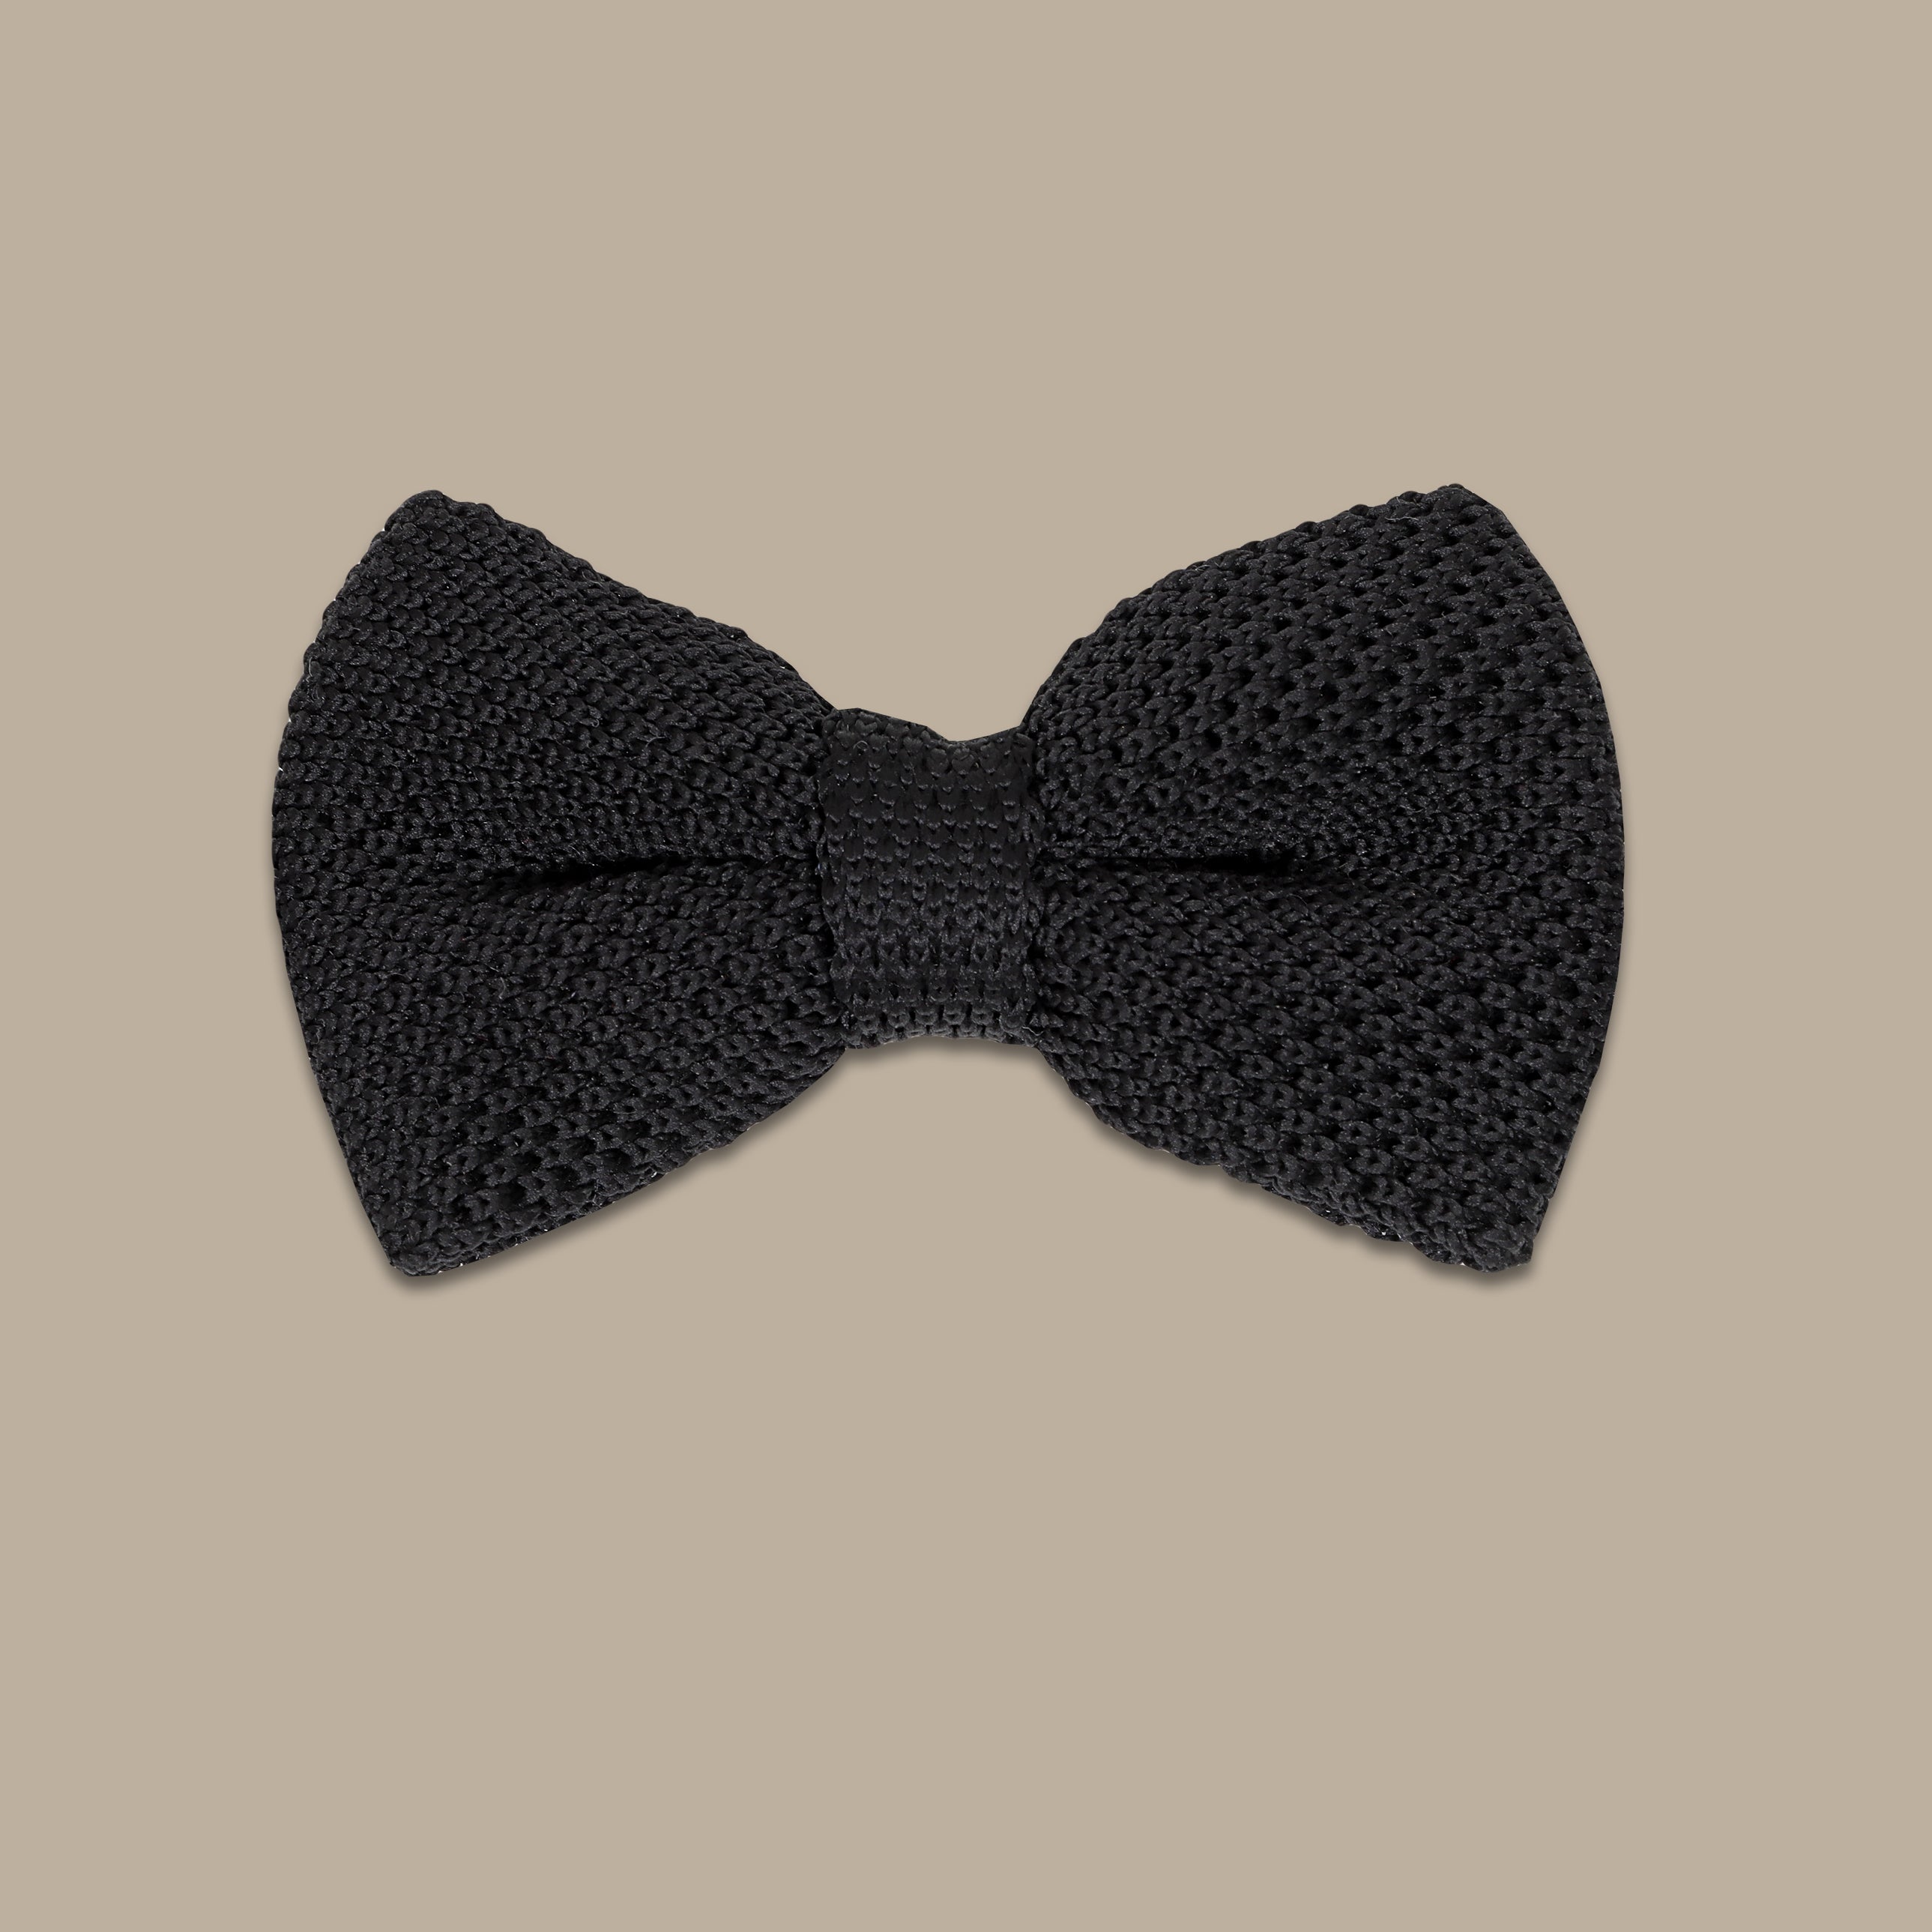 Monochrome Elegance: The Black Trico Bowtie